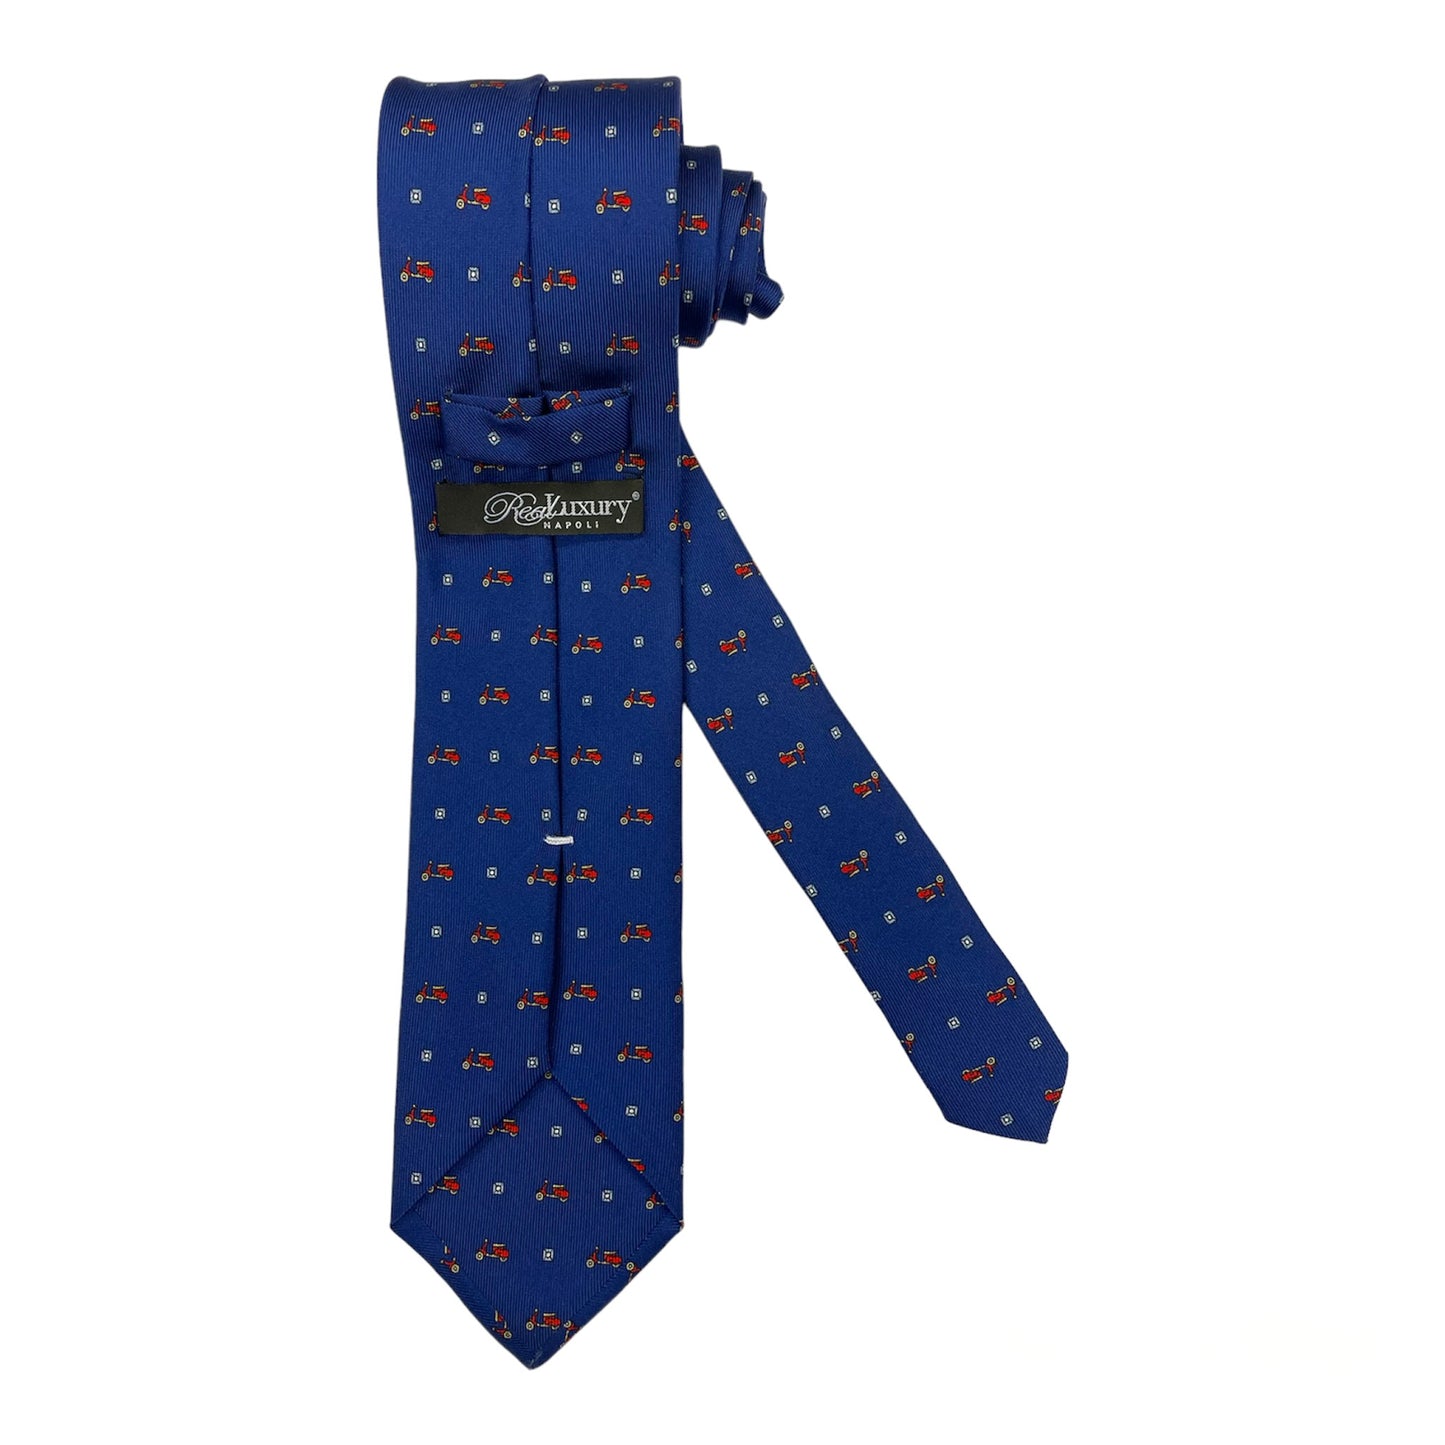 Cornflower blue silk tie vespa red and light blue checks